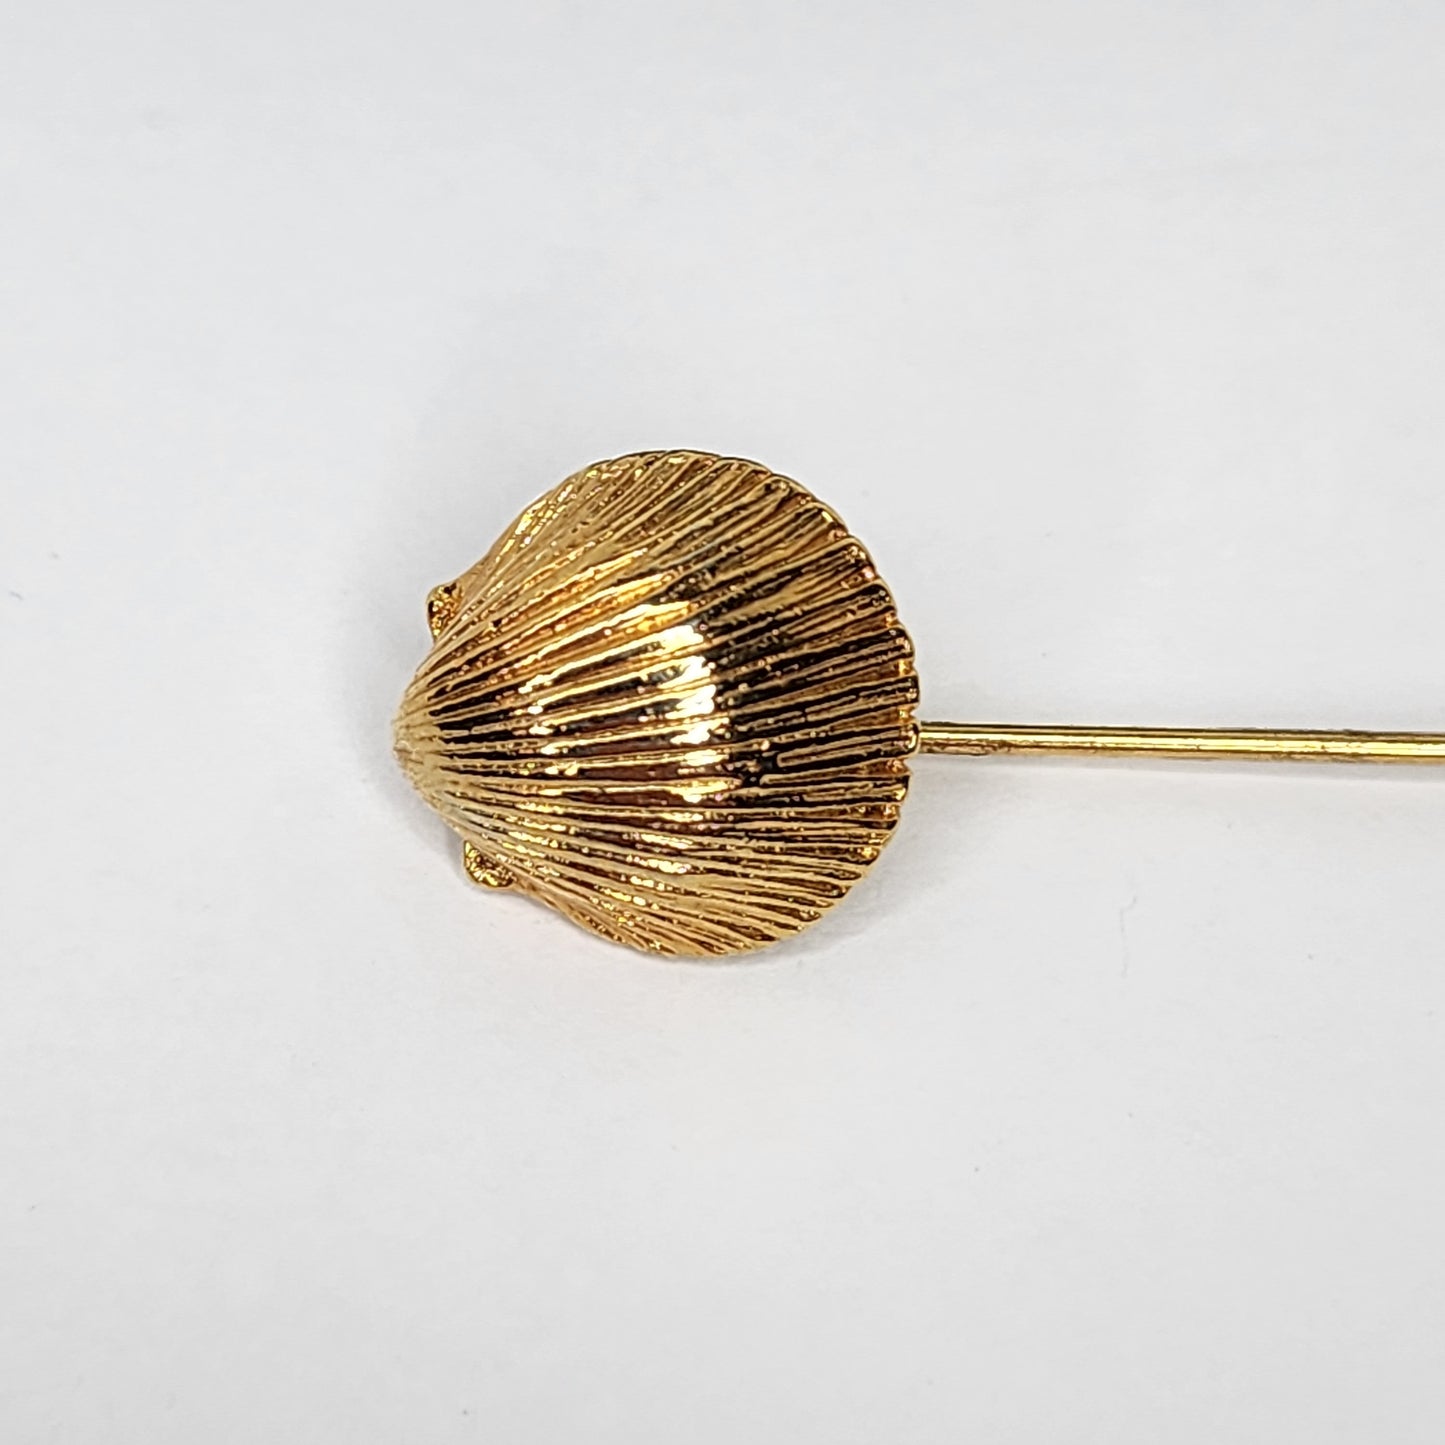 Vintage Monet Scalloped Seashell stick pin.